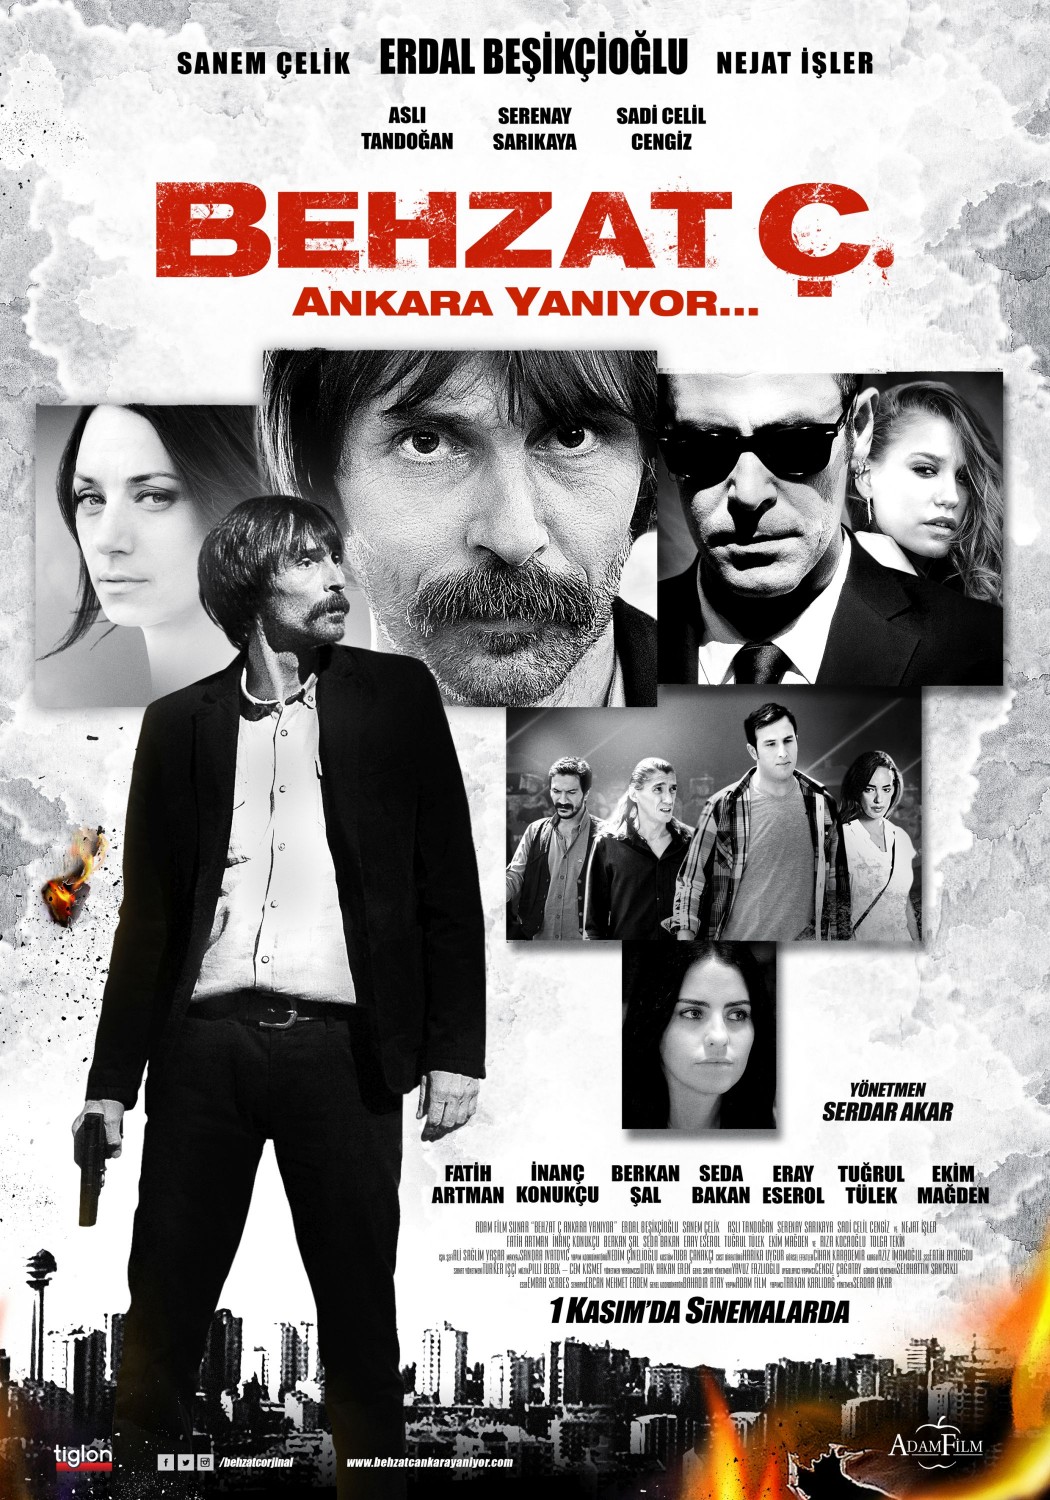 Extra Large Movie Poster Image for Behzat Ç.: Ankara Yaniyor 